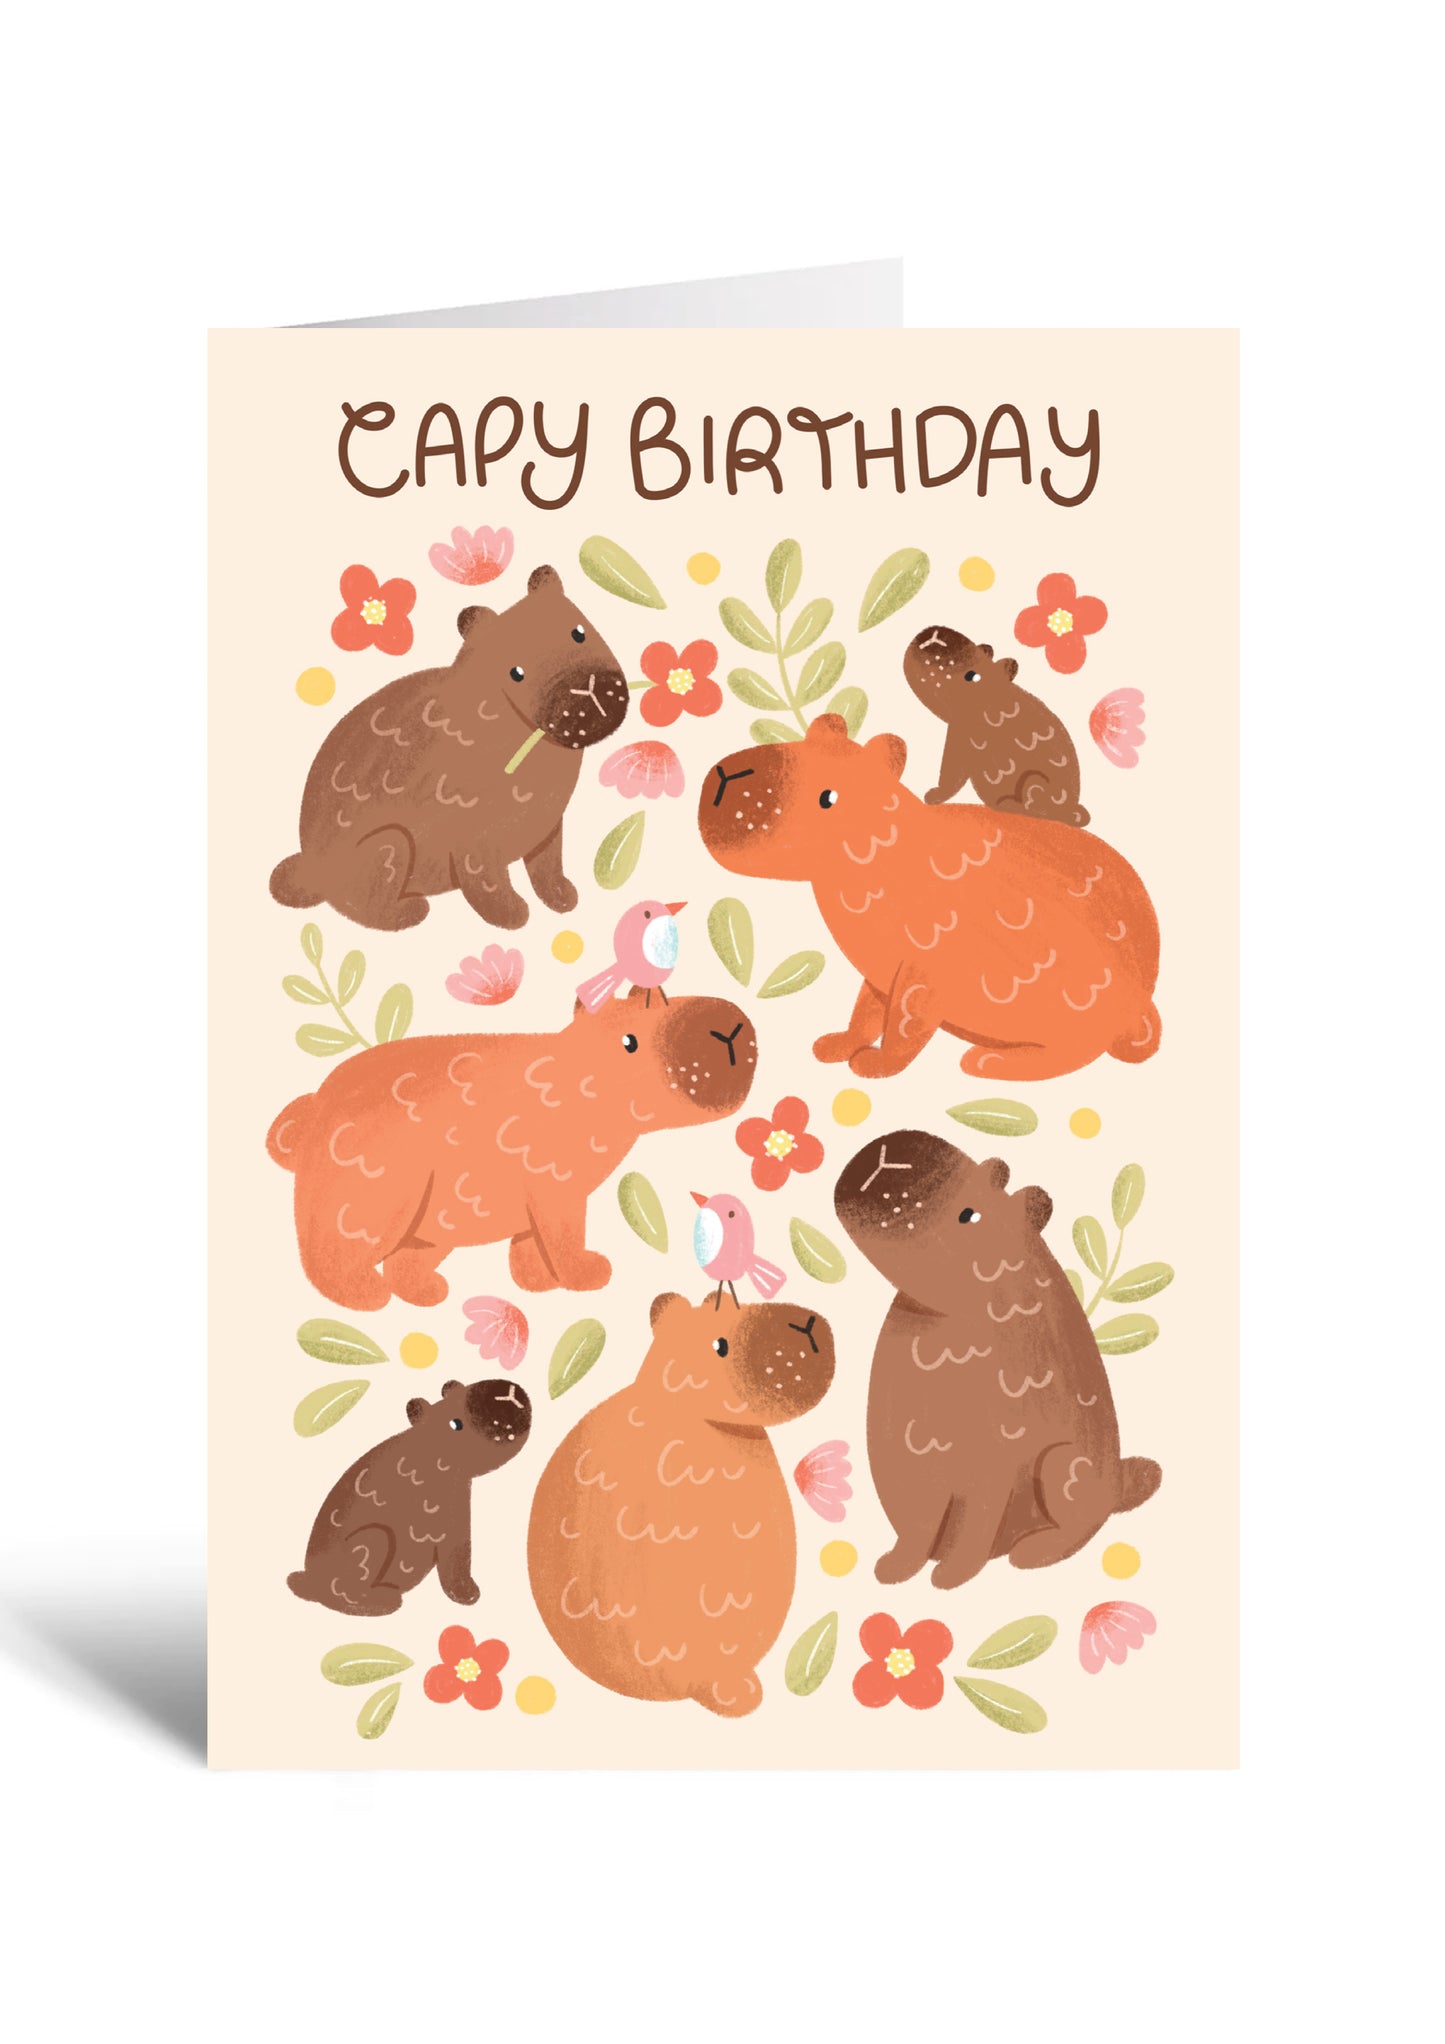 Capybara Birthday Card